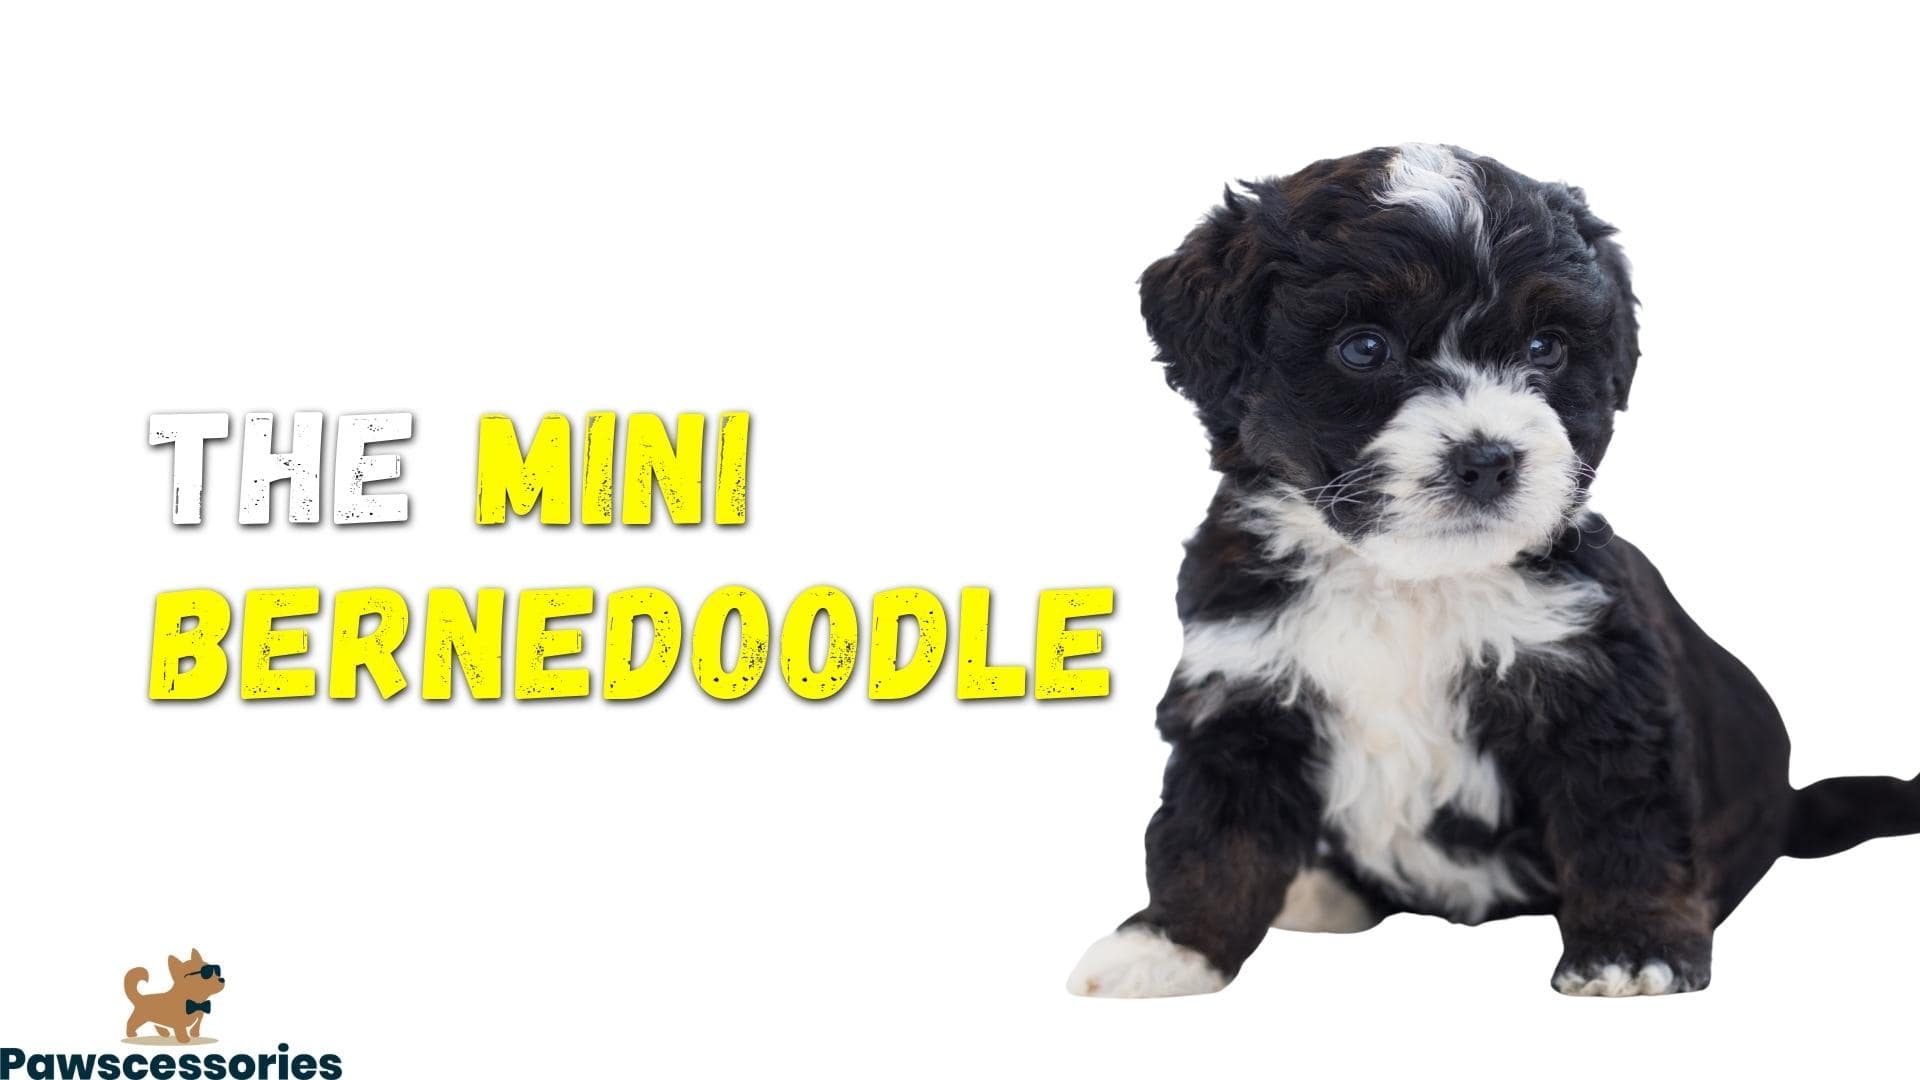 The mini bernedoodle